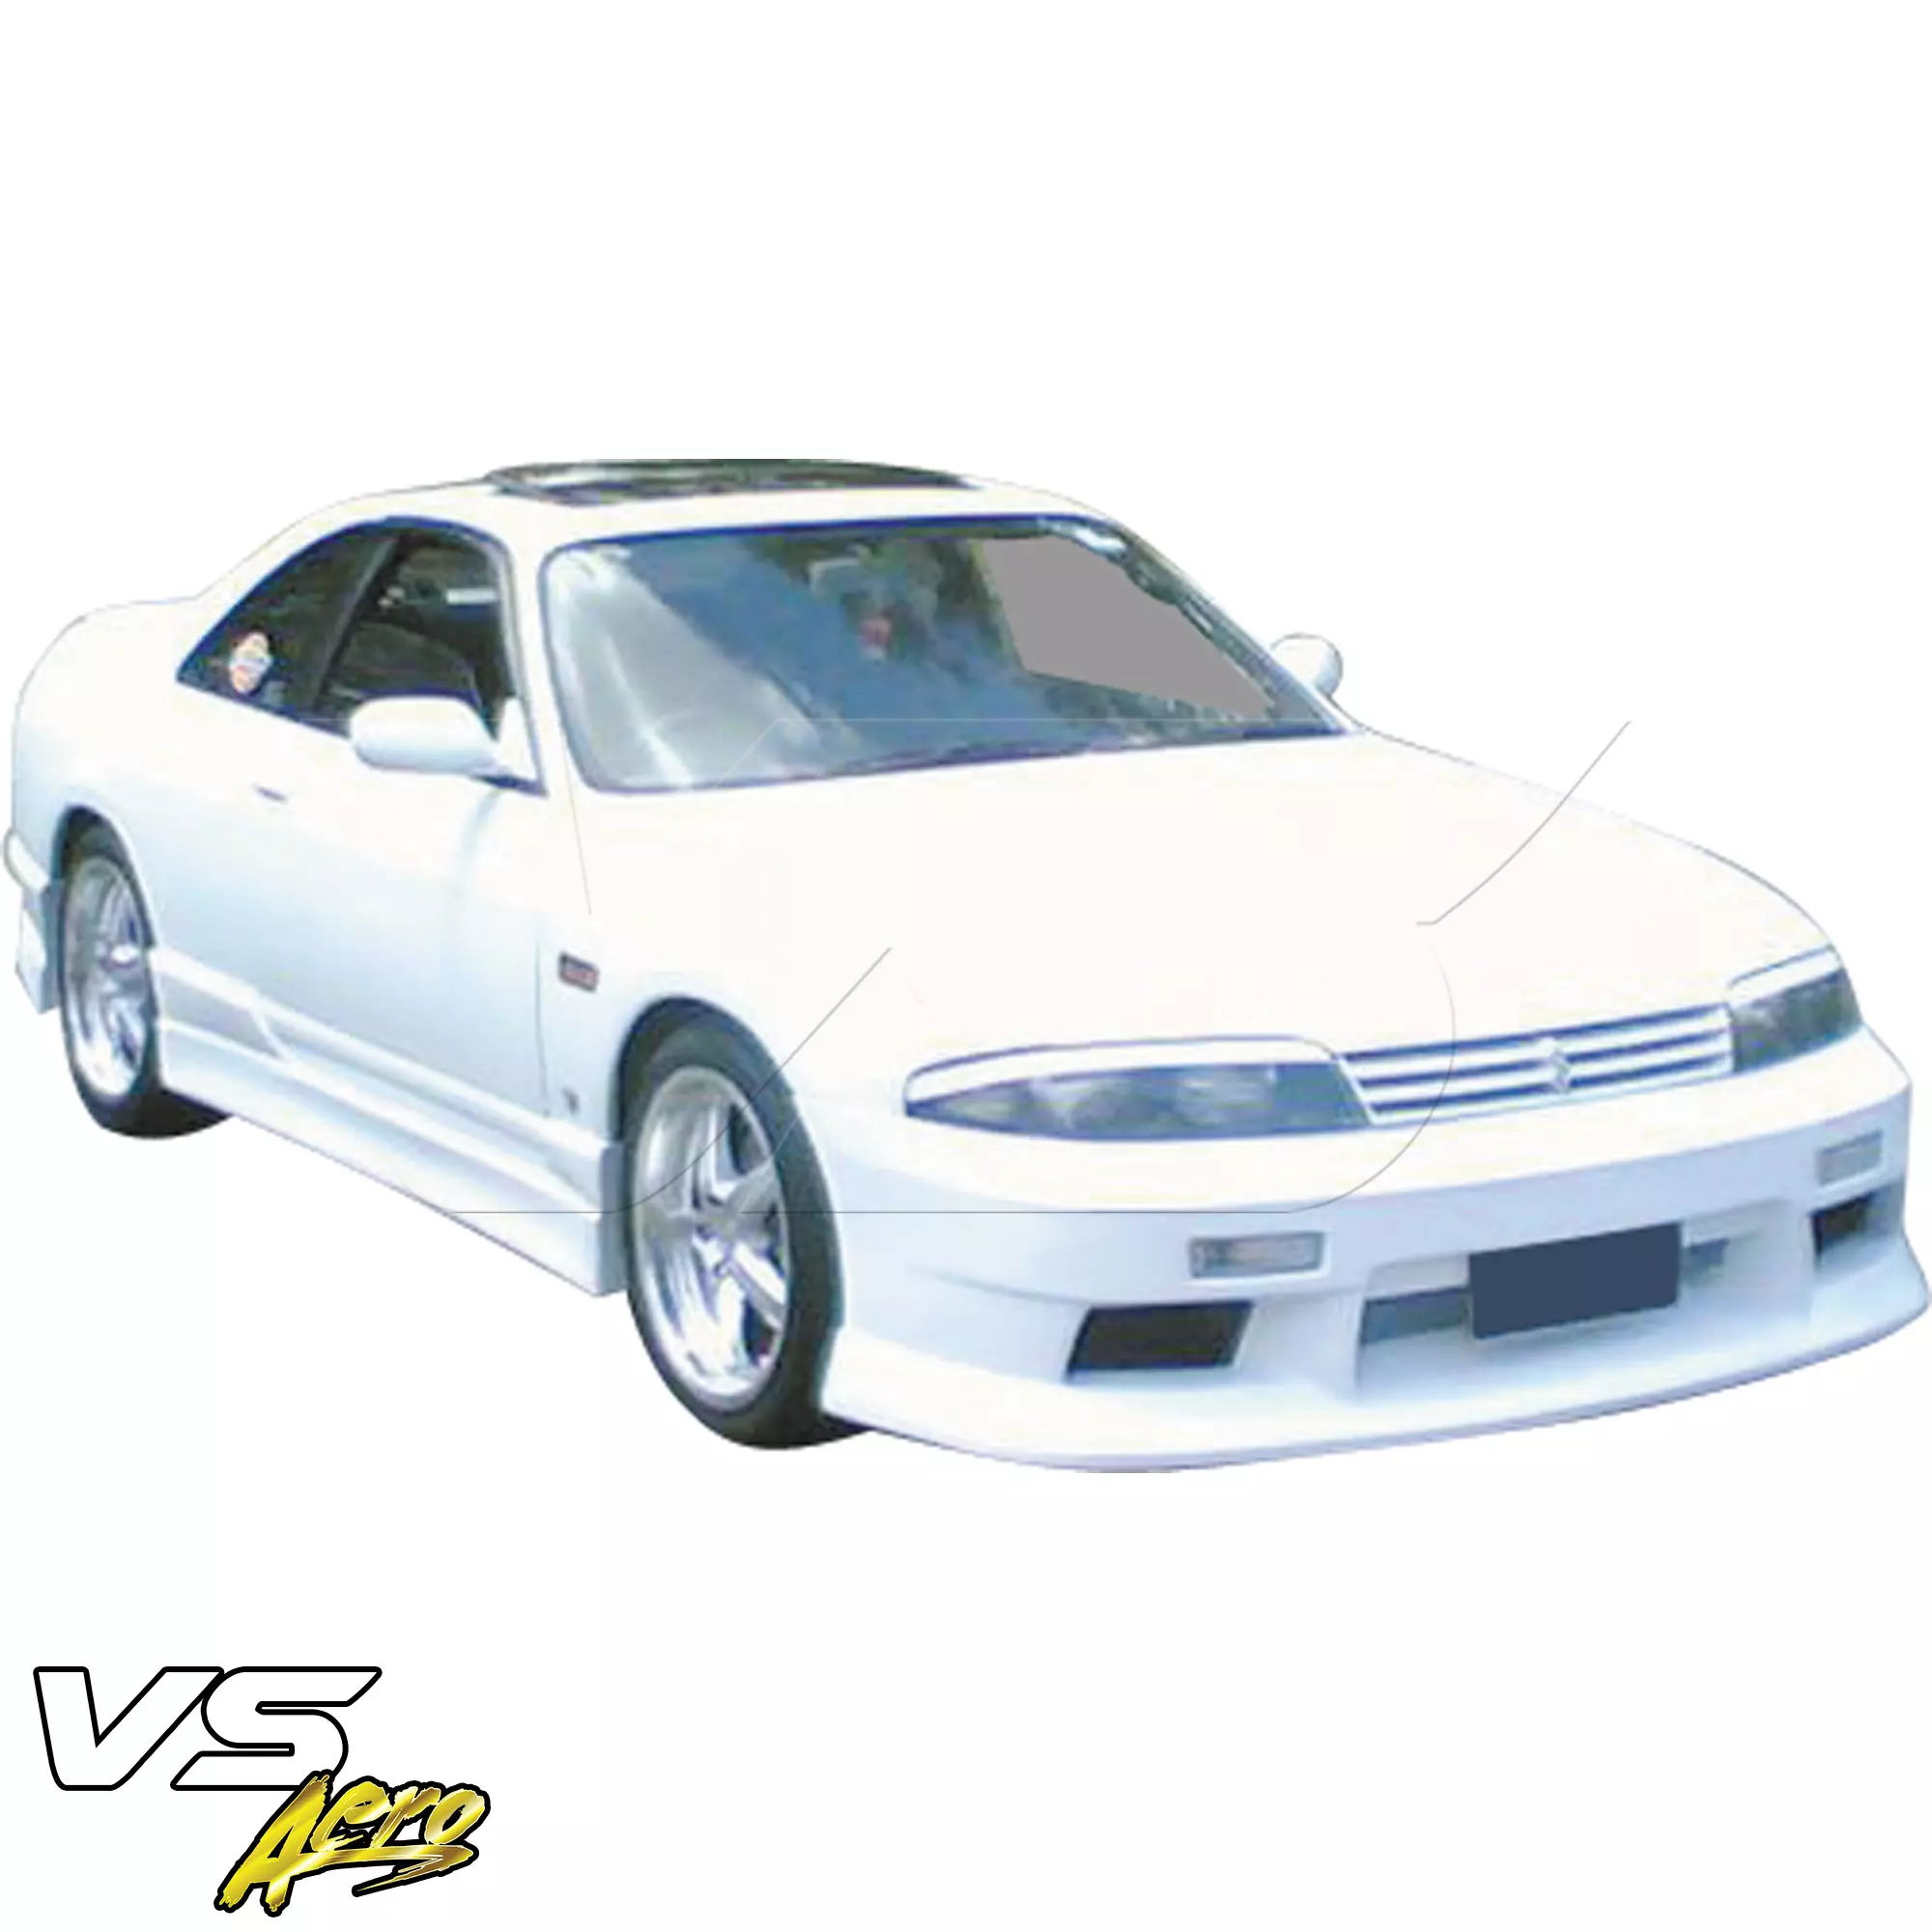 VSaero FRP MSPO Body Kit 4pc > Nissan Skyline R33 GTS 1995-1998 > 2dr Coupe - Image 5